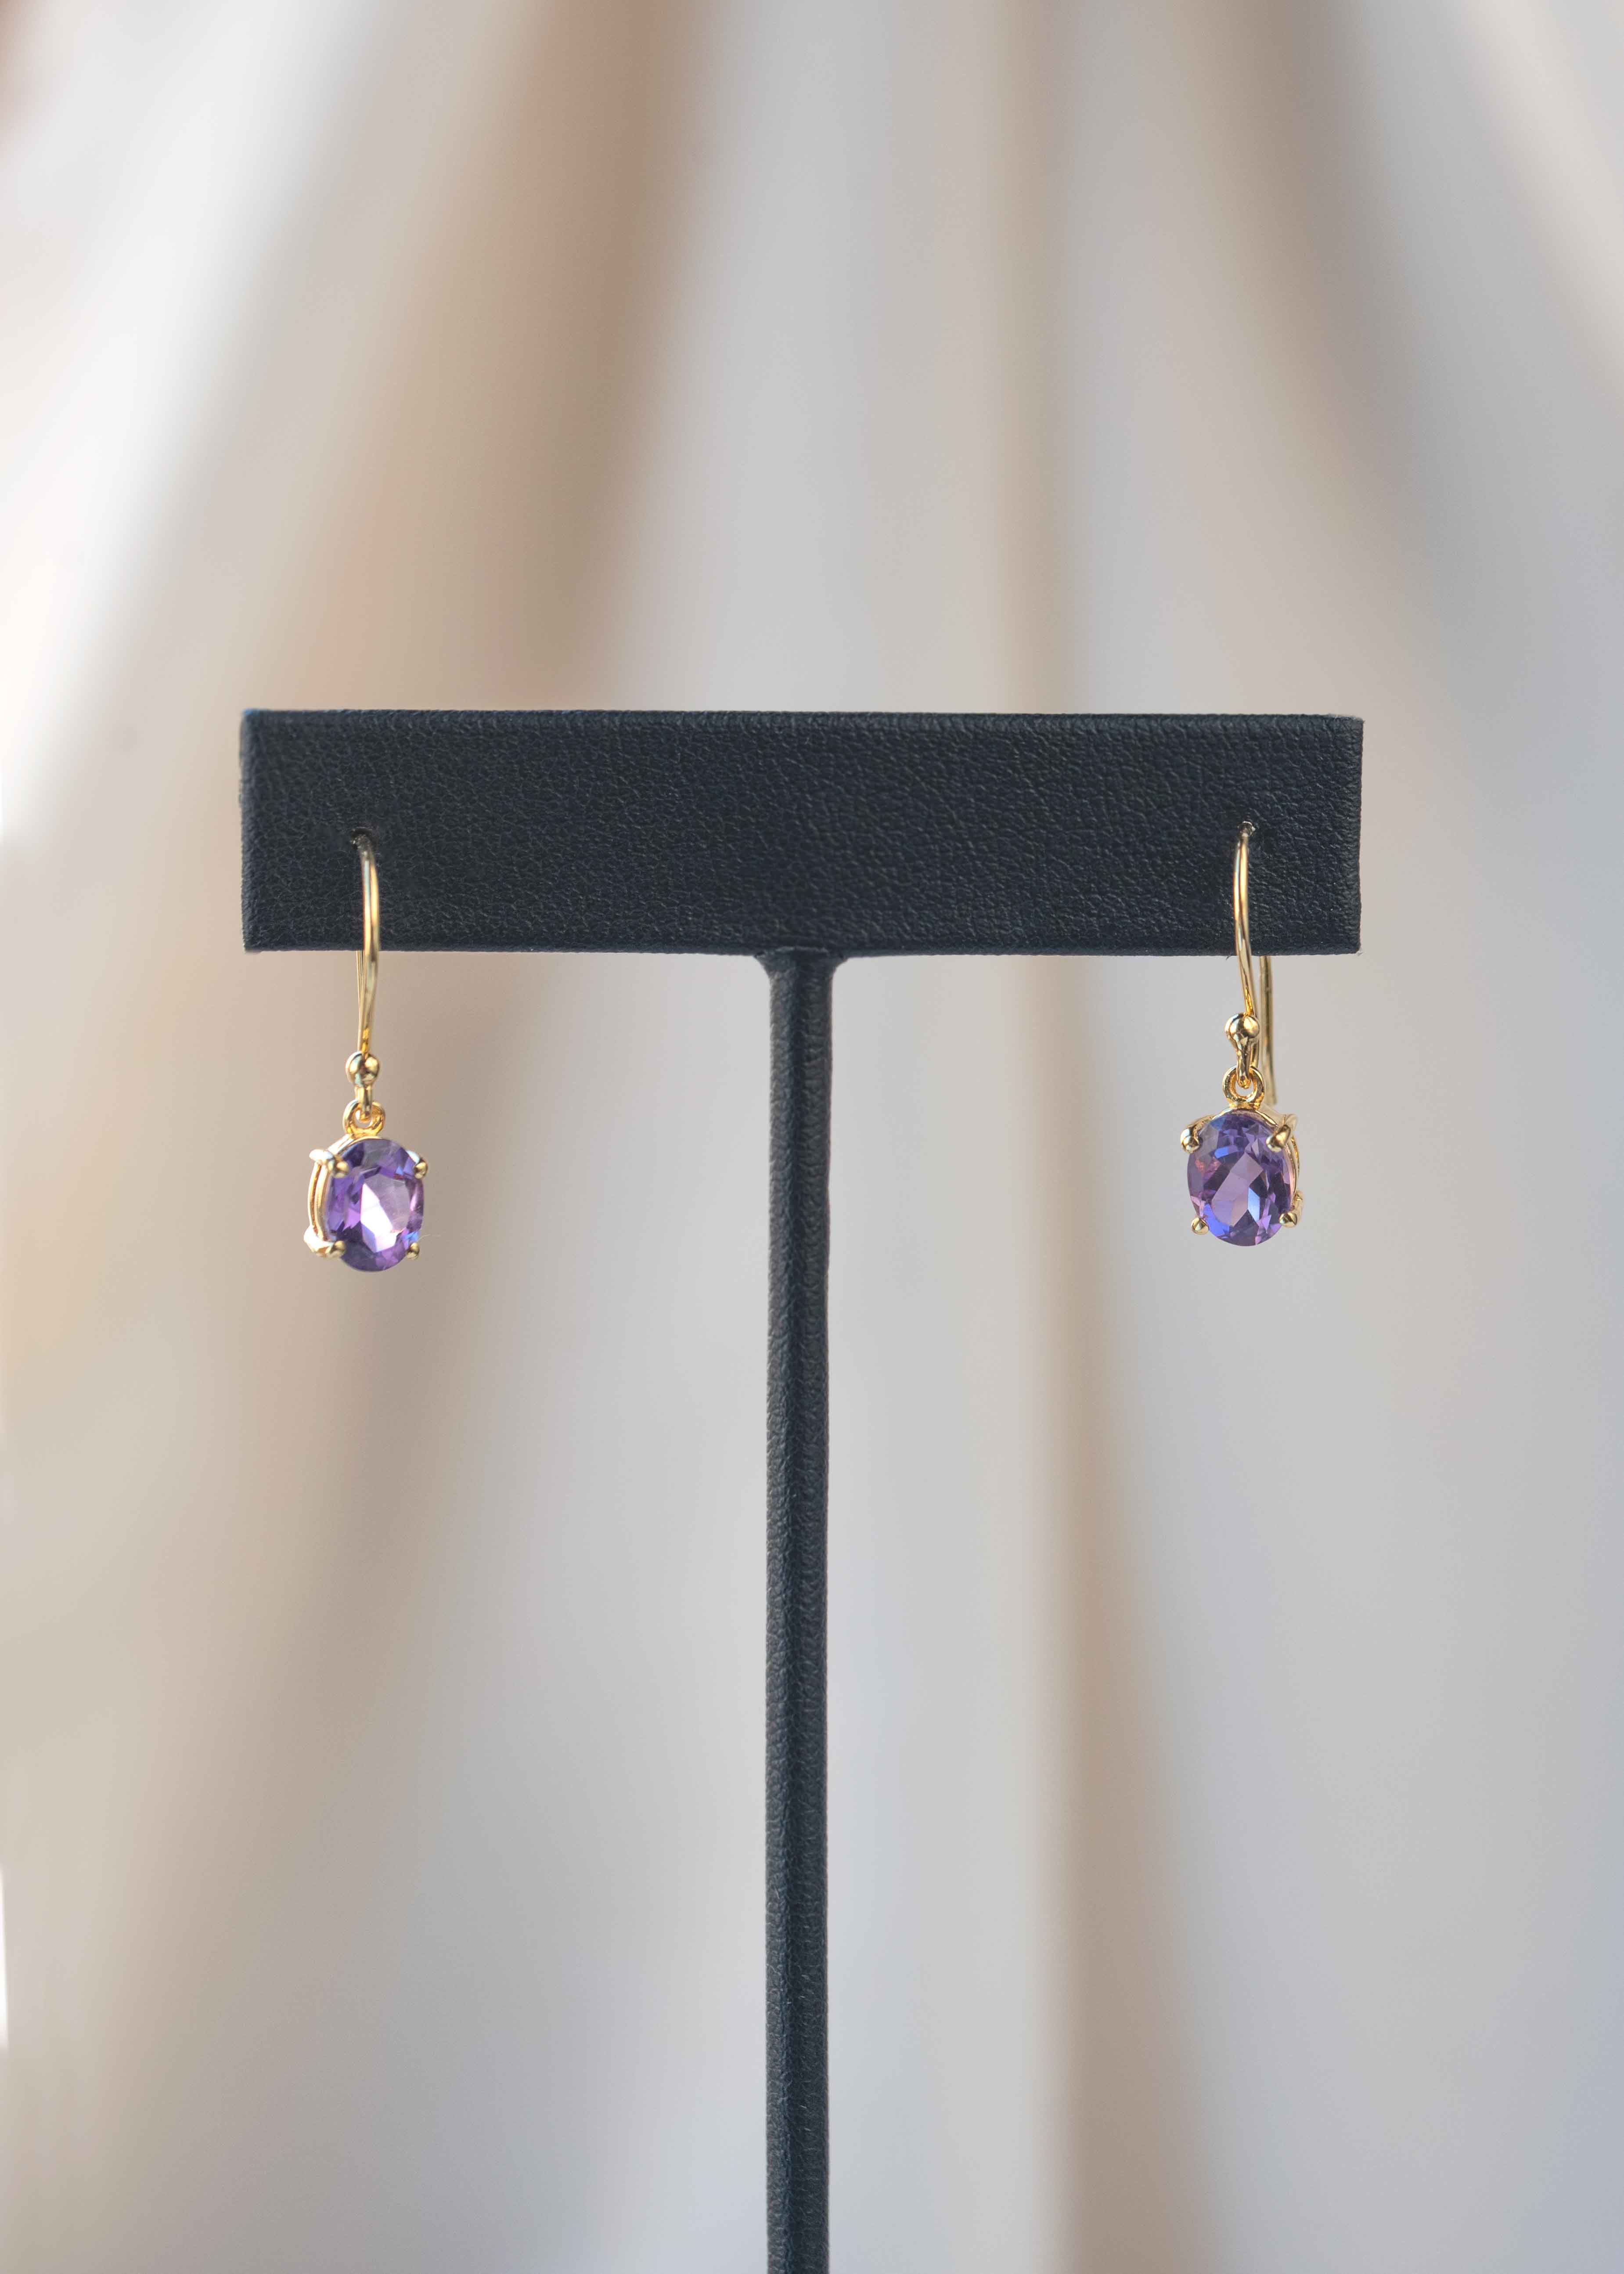 Amethyst Dangle Drop Earrings gold plated february birthstone gemstone light purple lavender  Gifts for Women